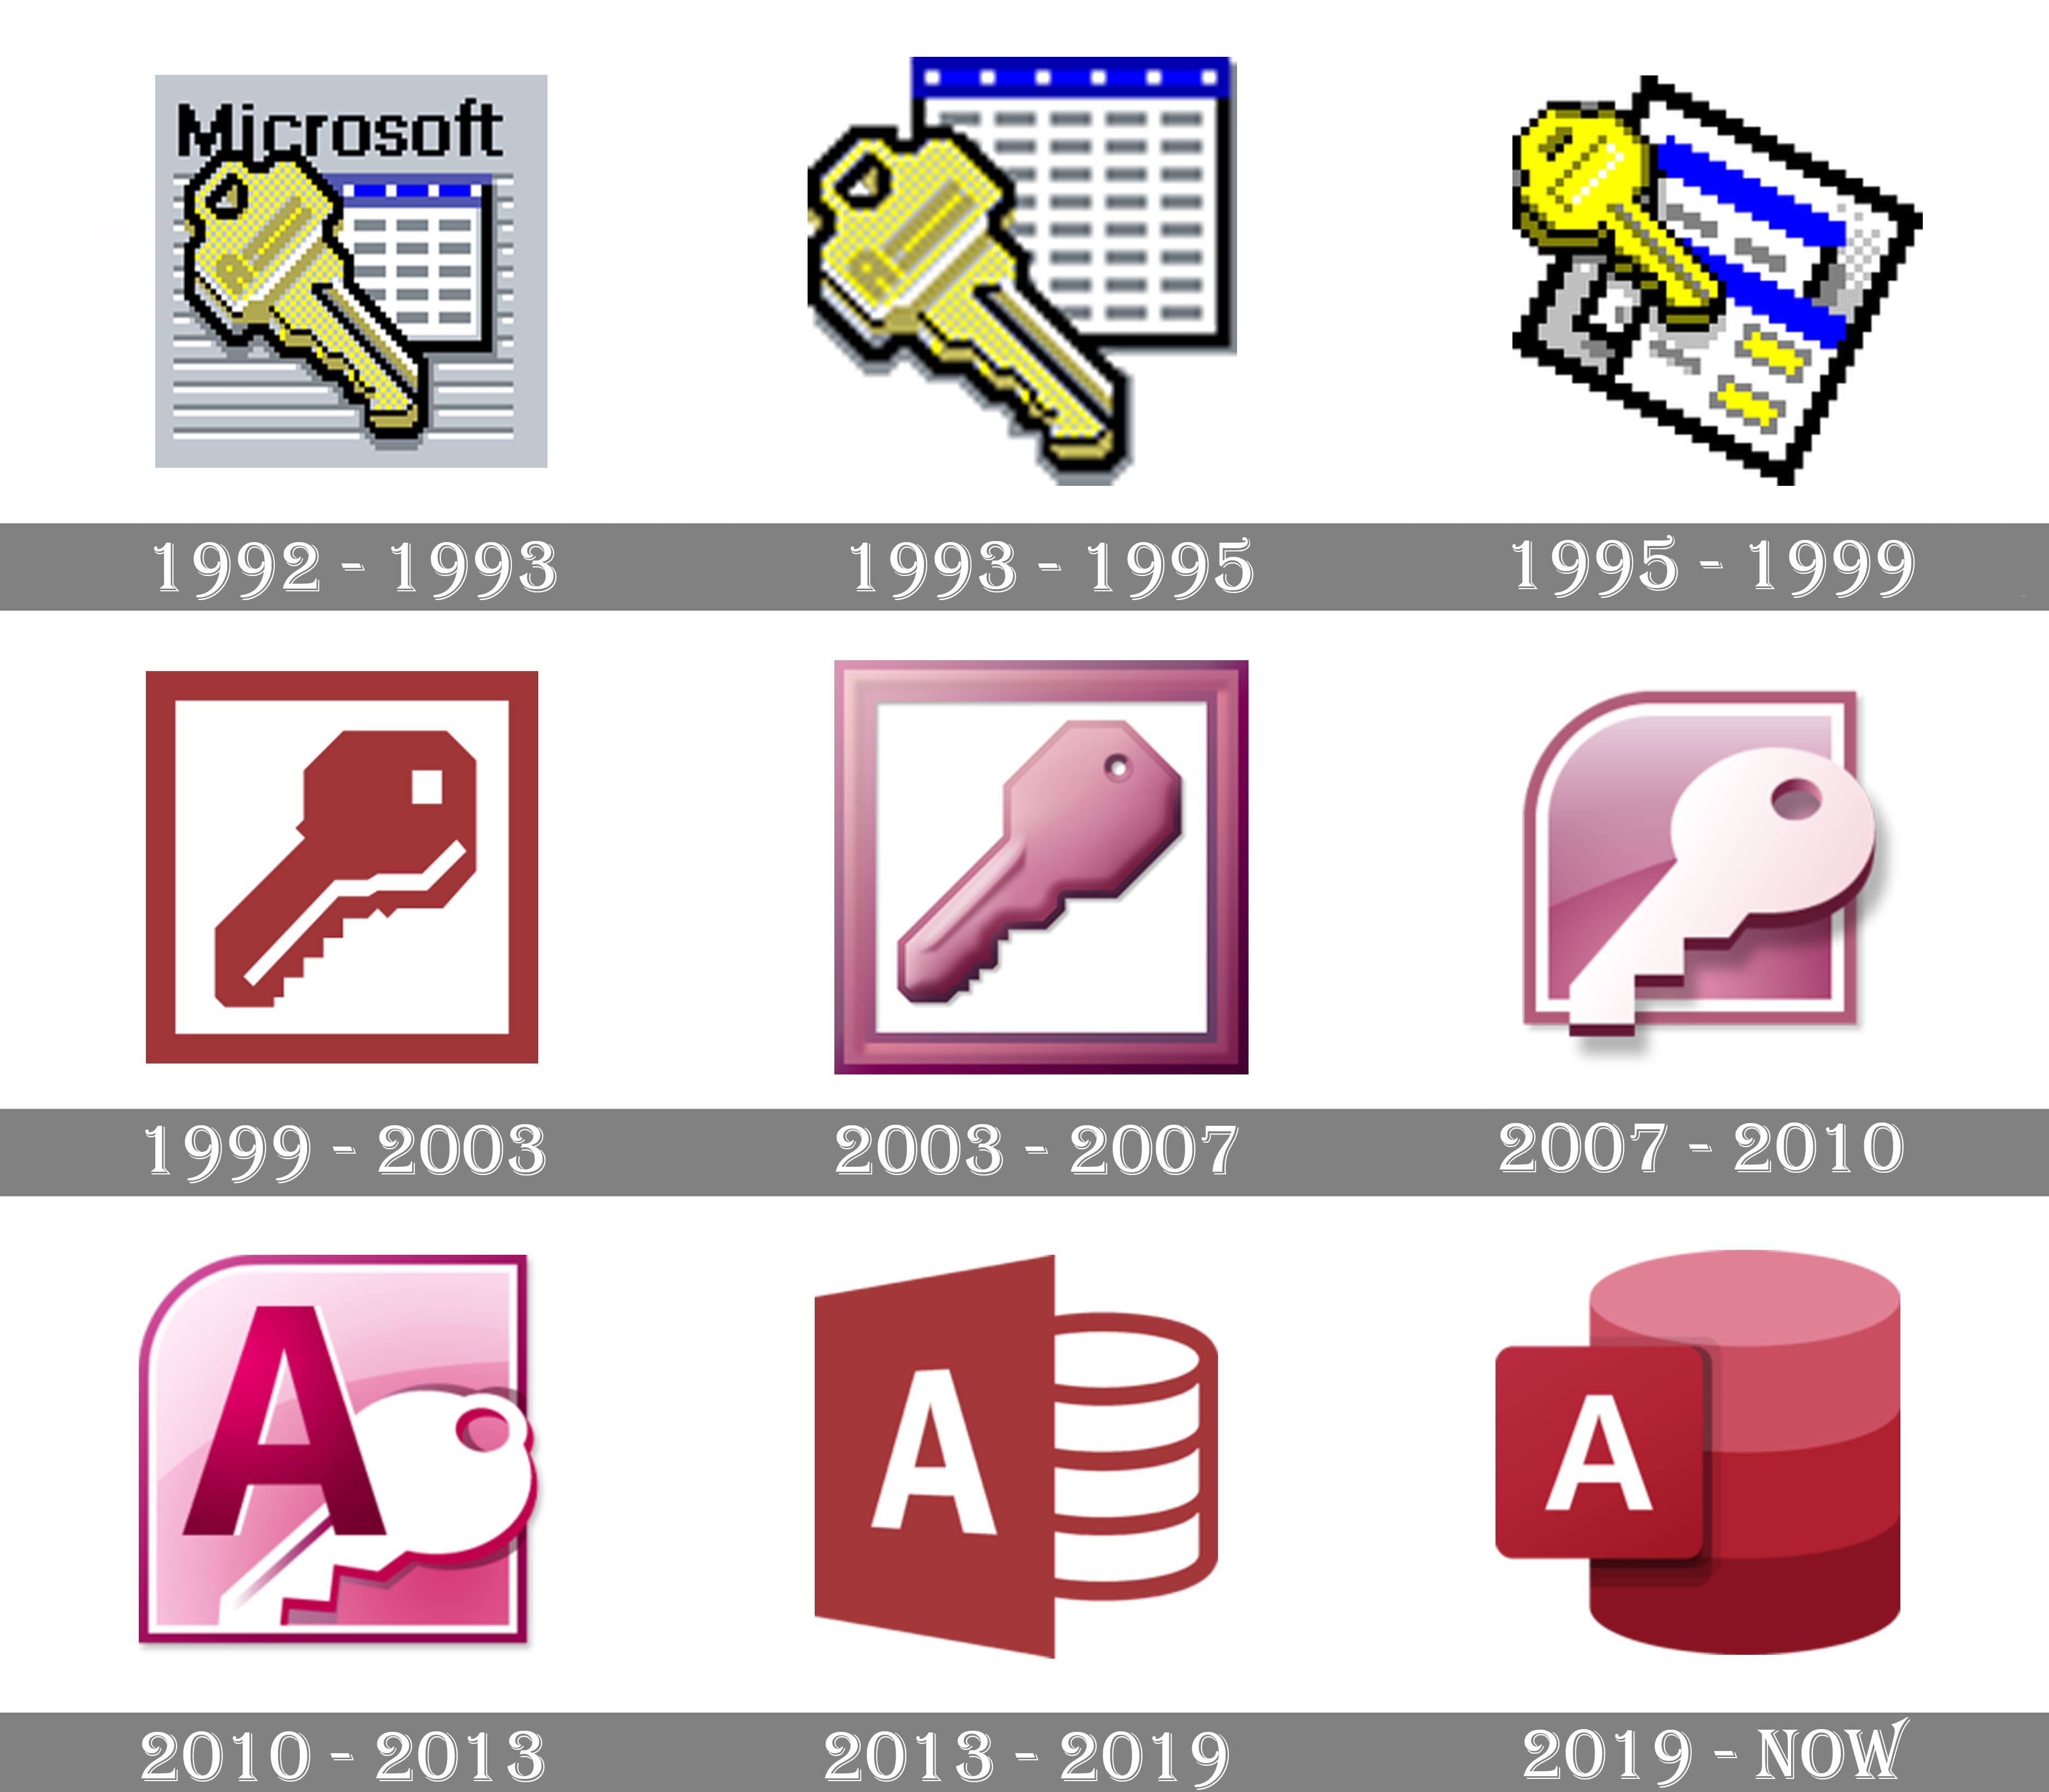 microsoft access database icon